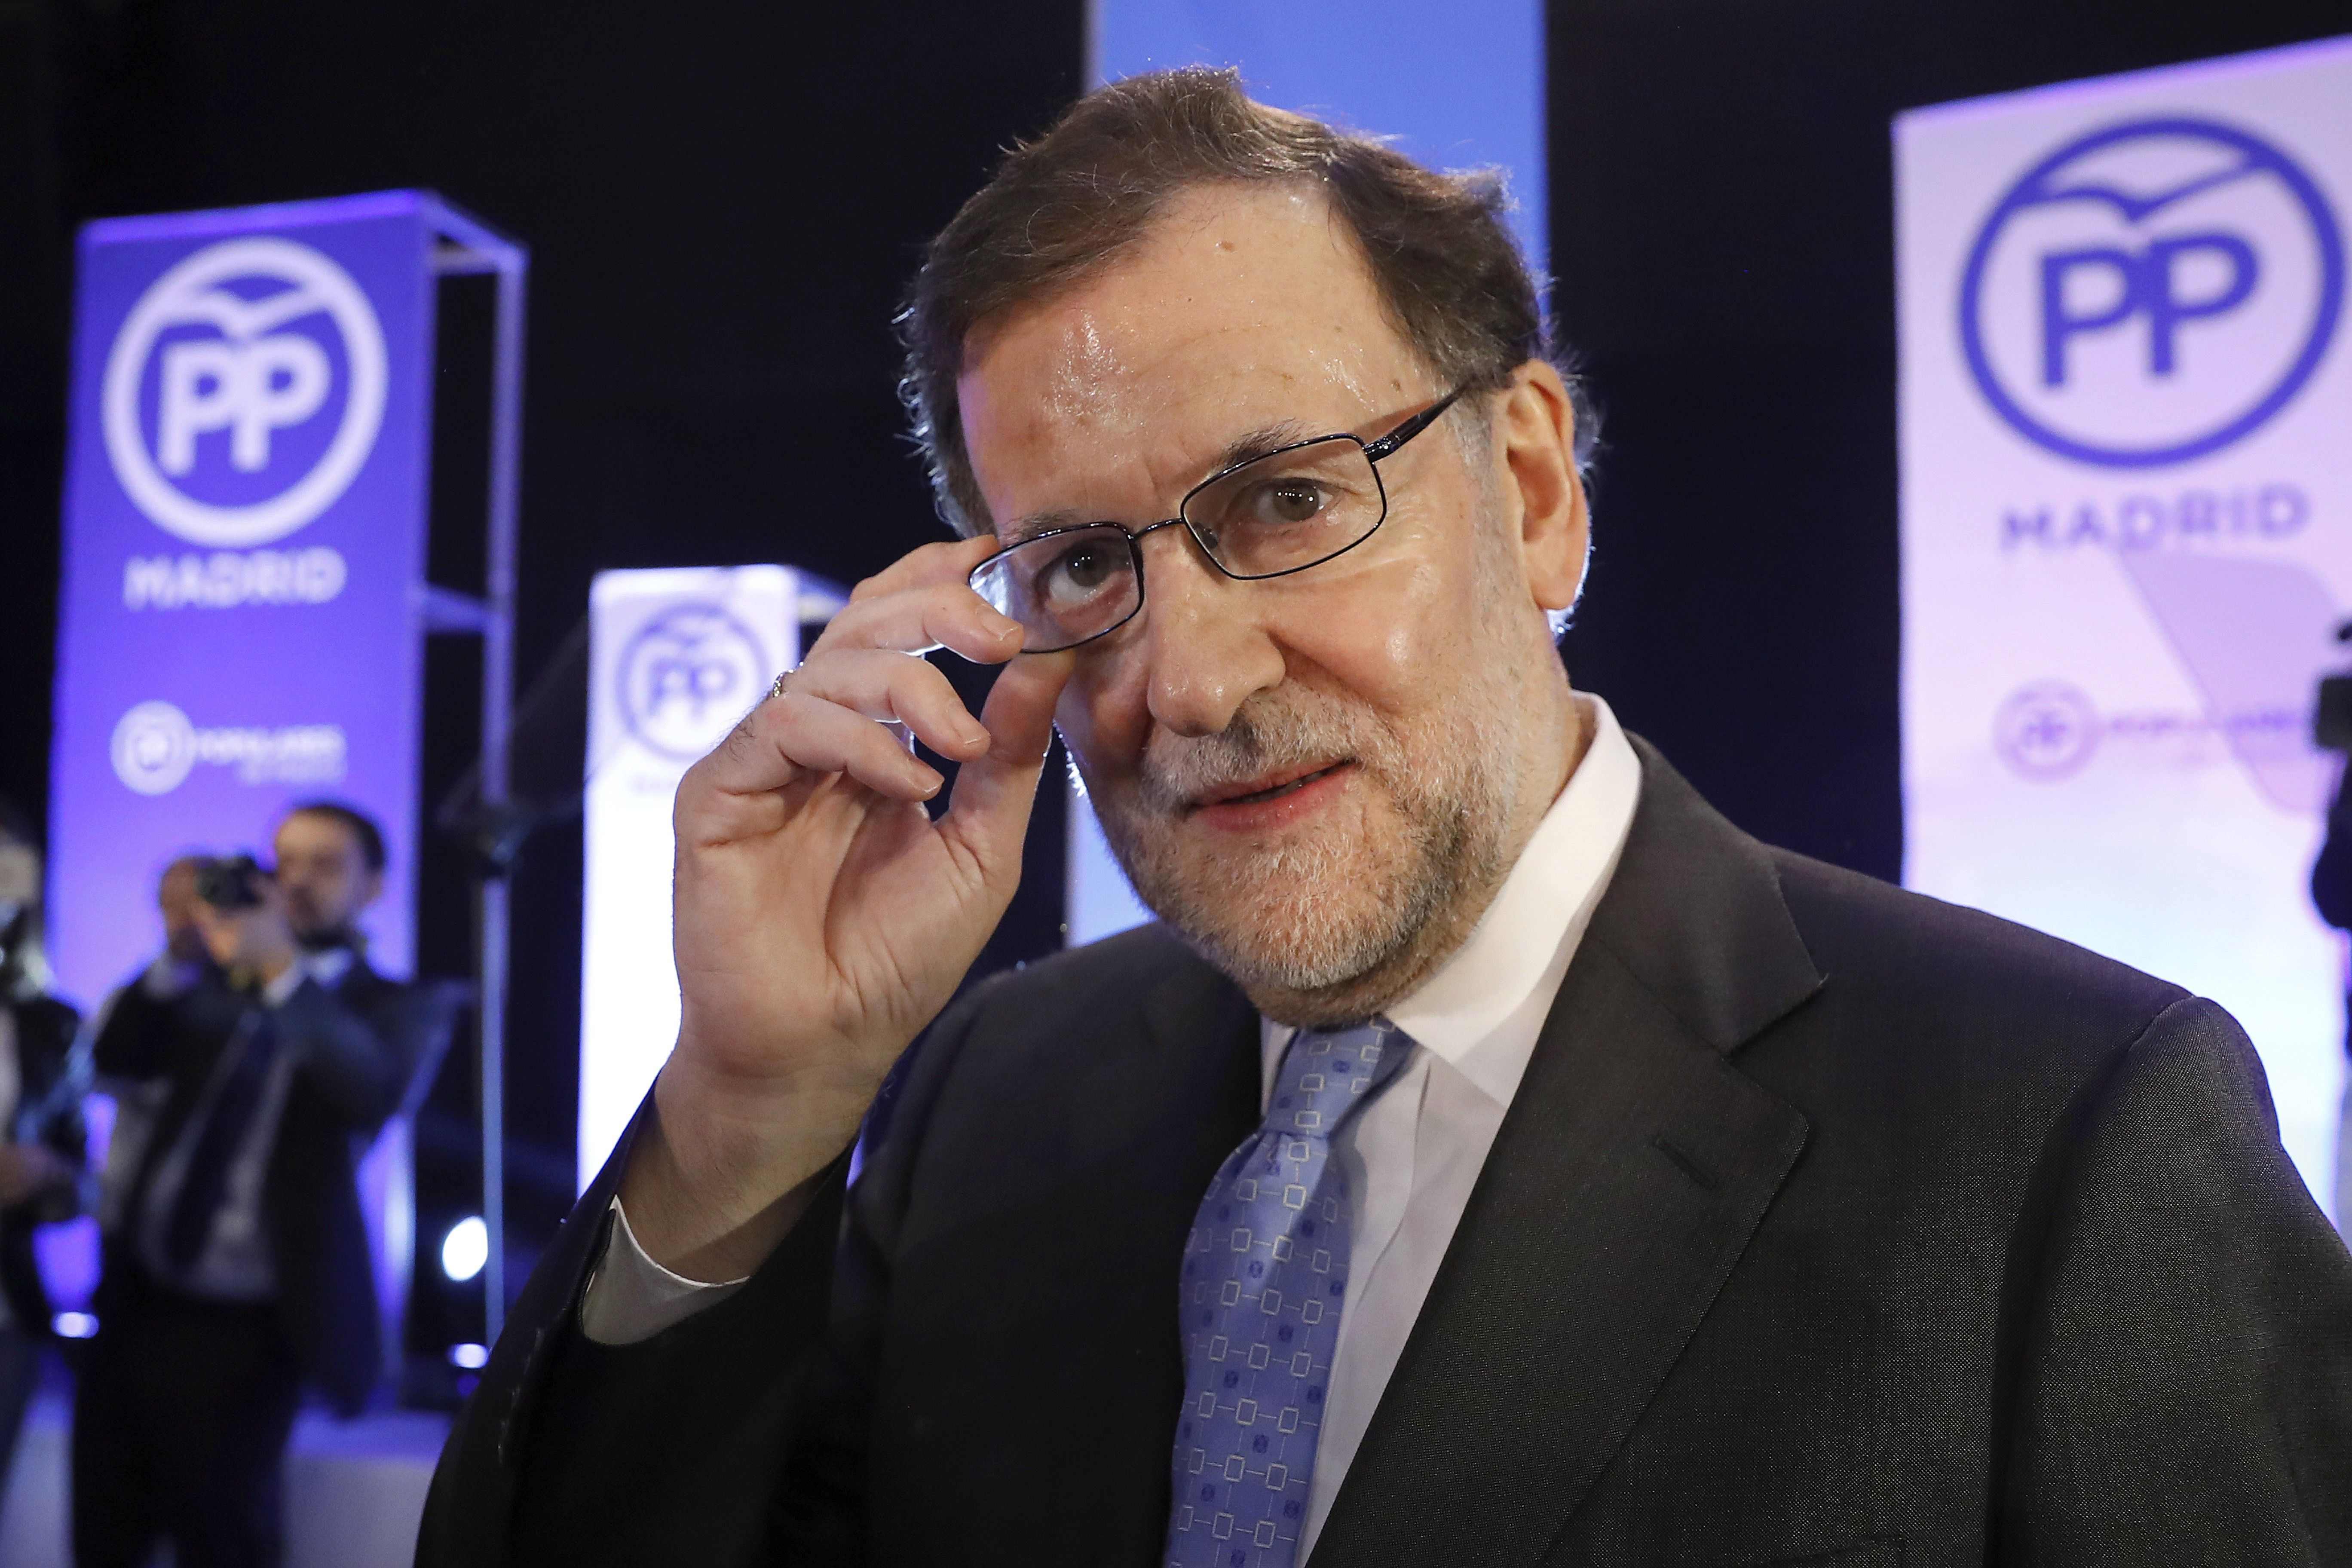 La broma sobre el mur català de Rajoy que triomfa a Whatsapp